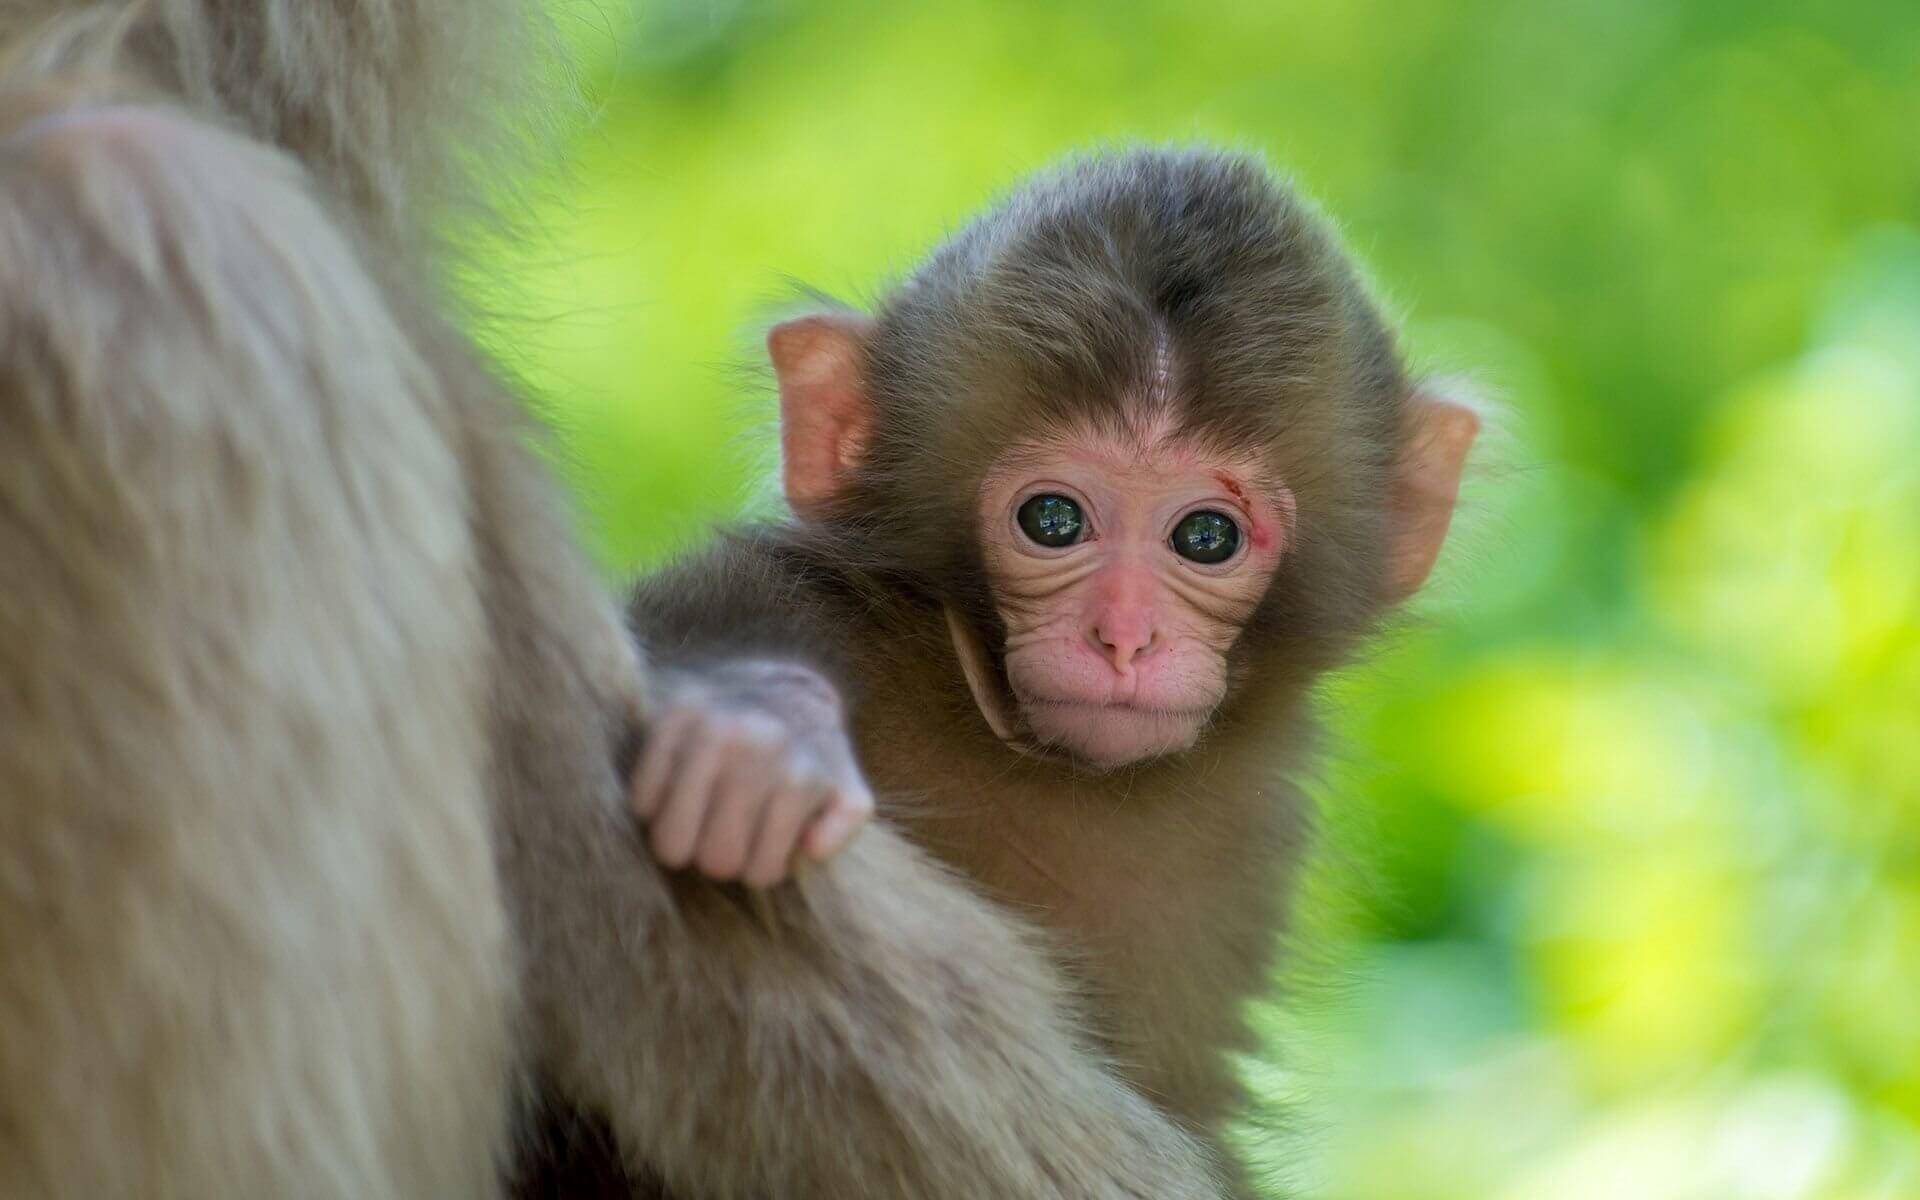 Baby Monkey Dreams